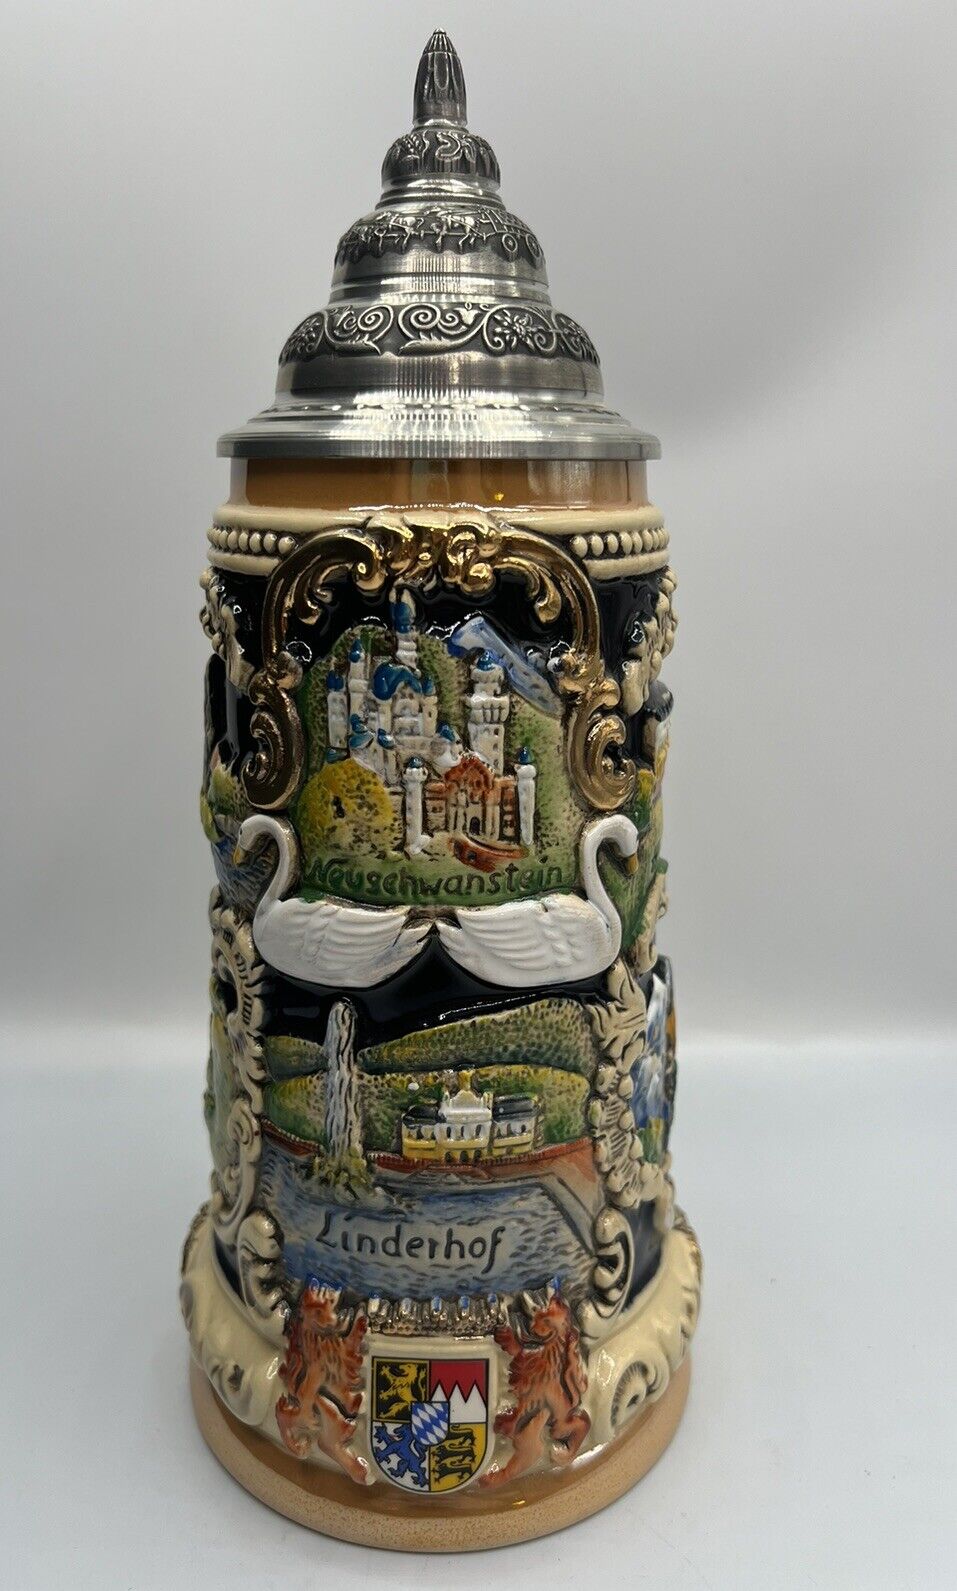 German Beer Stein Castles of King Ludwig Neuschwanstein LIMITED EDITION